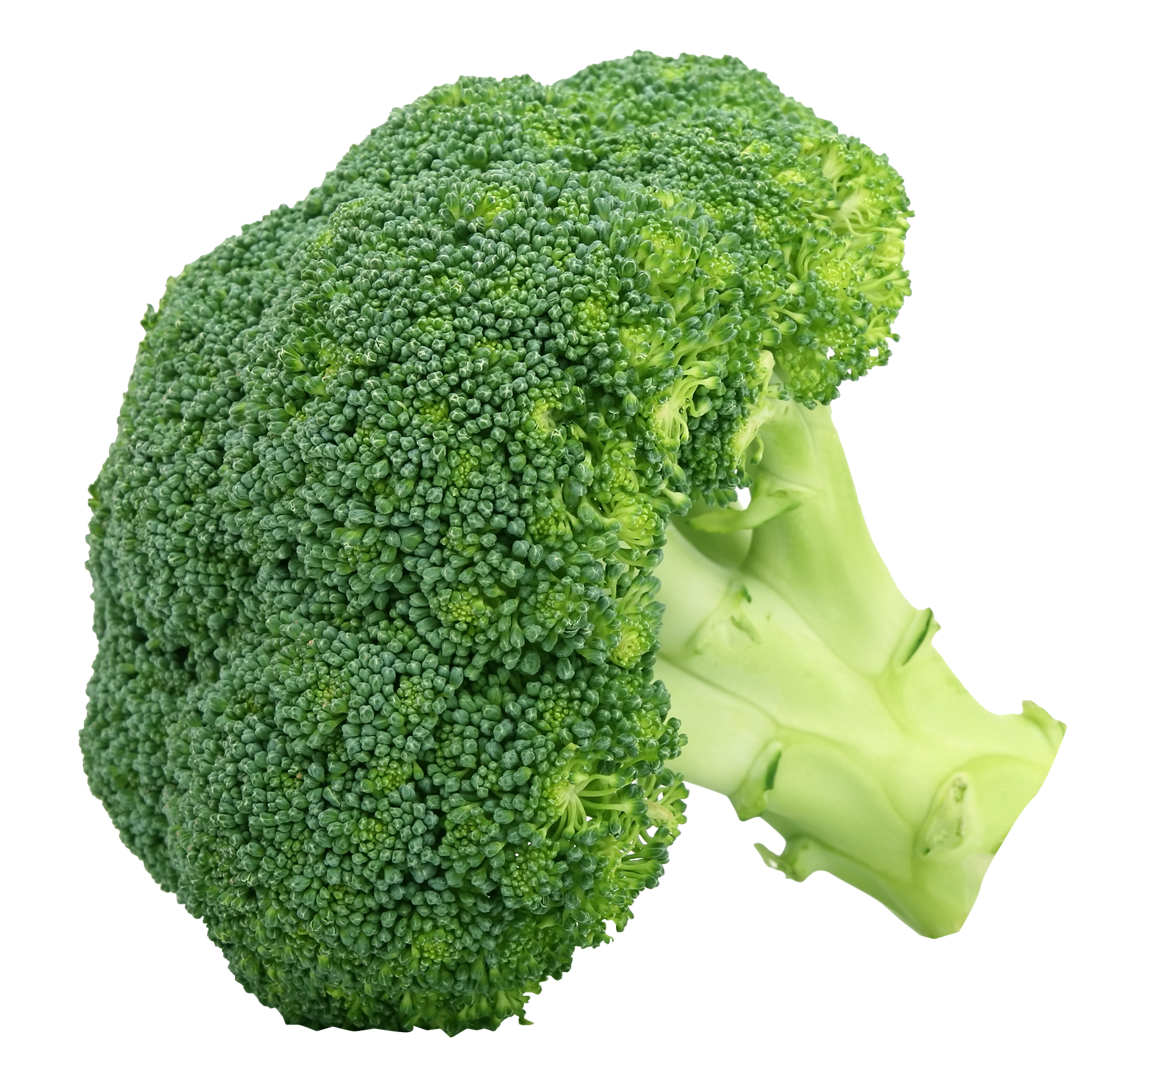 Png image transparent best. Lettuce clipart broccoli